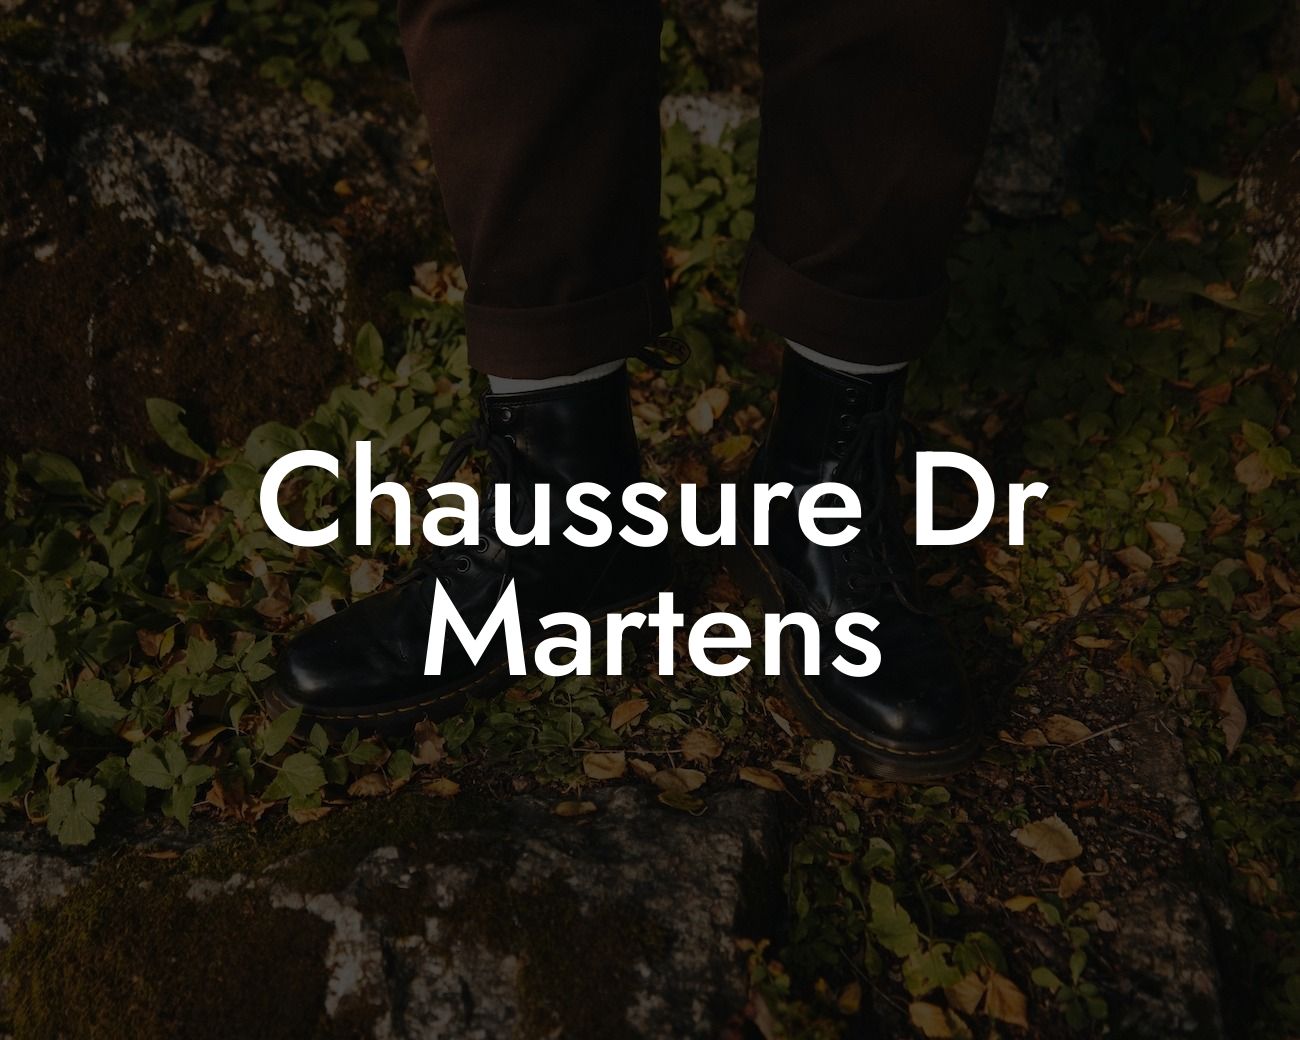 Chaussure Dr Martens